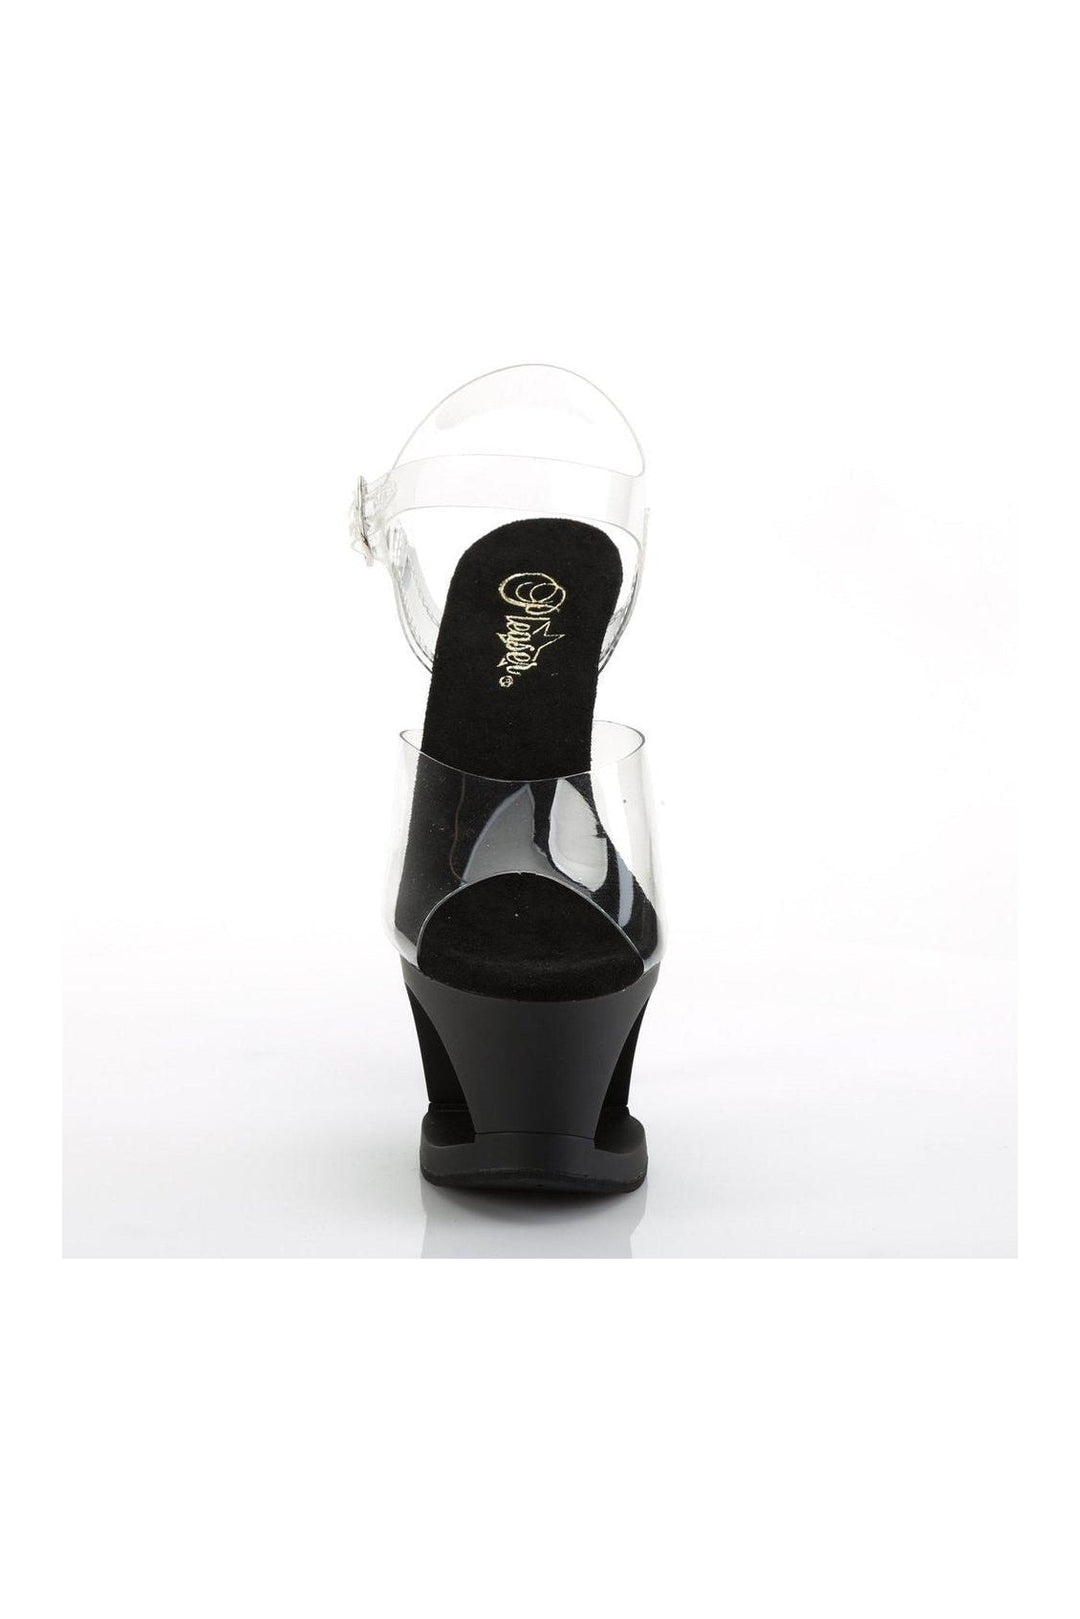 MOON-708SK Clear Vinyl Sandal-Sandals-Pleaser-SEXYSHOES.COM